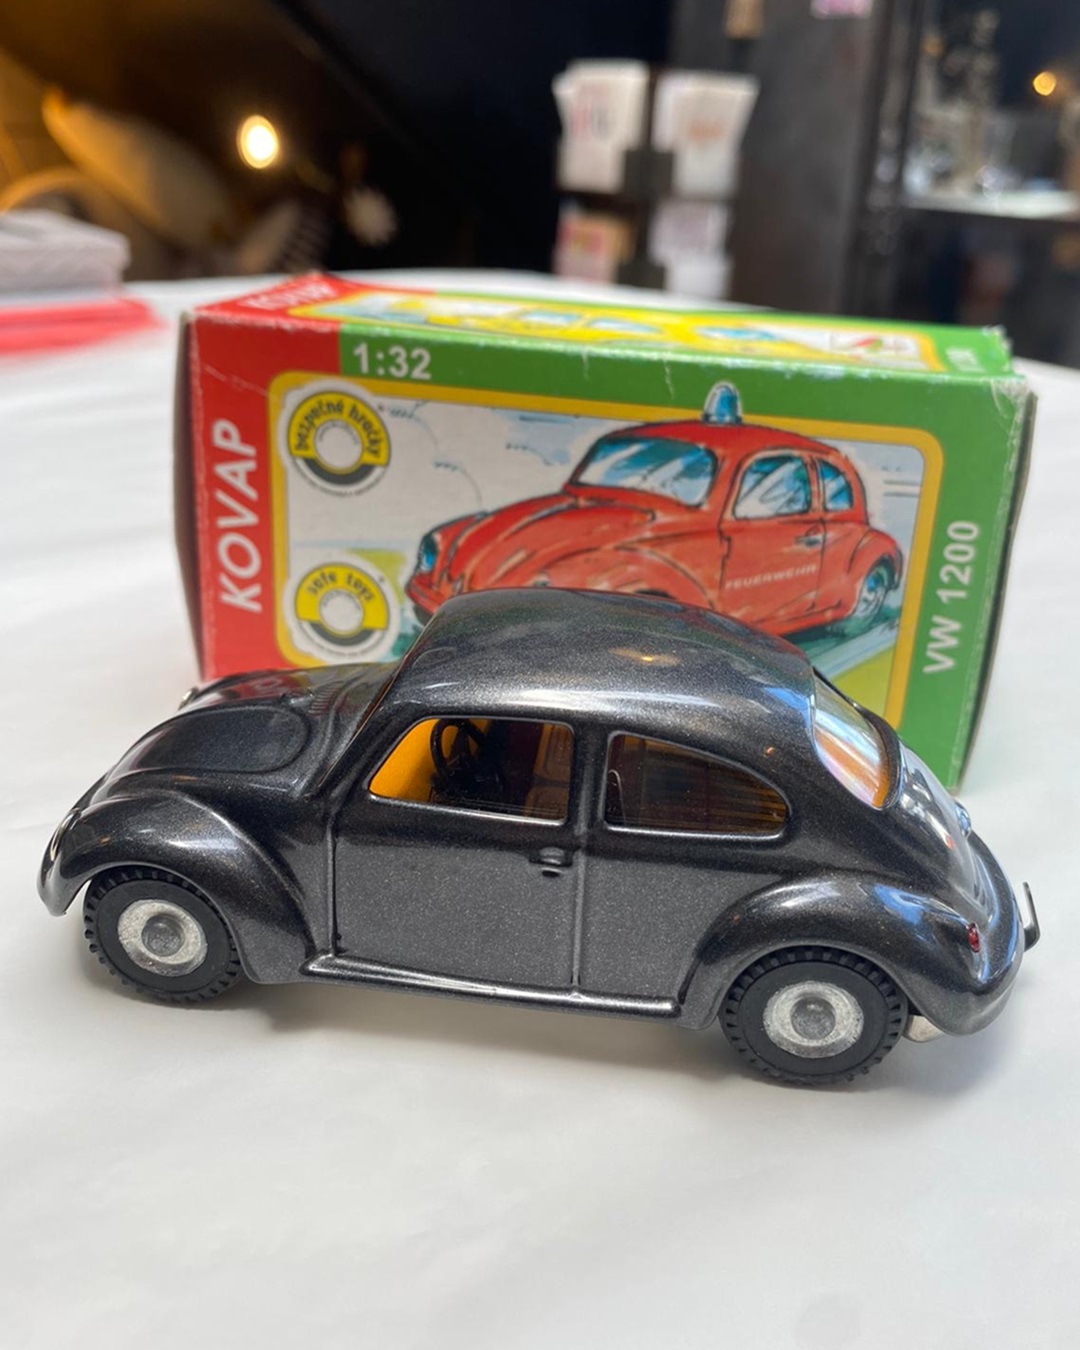 Black VW toy car with box